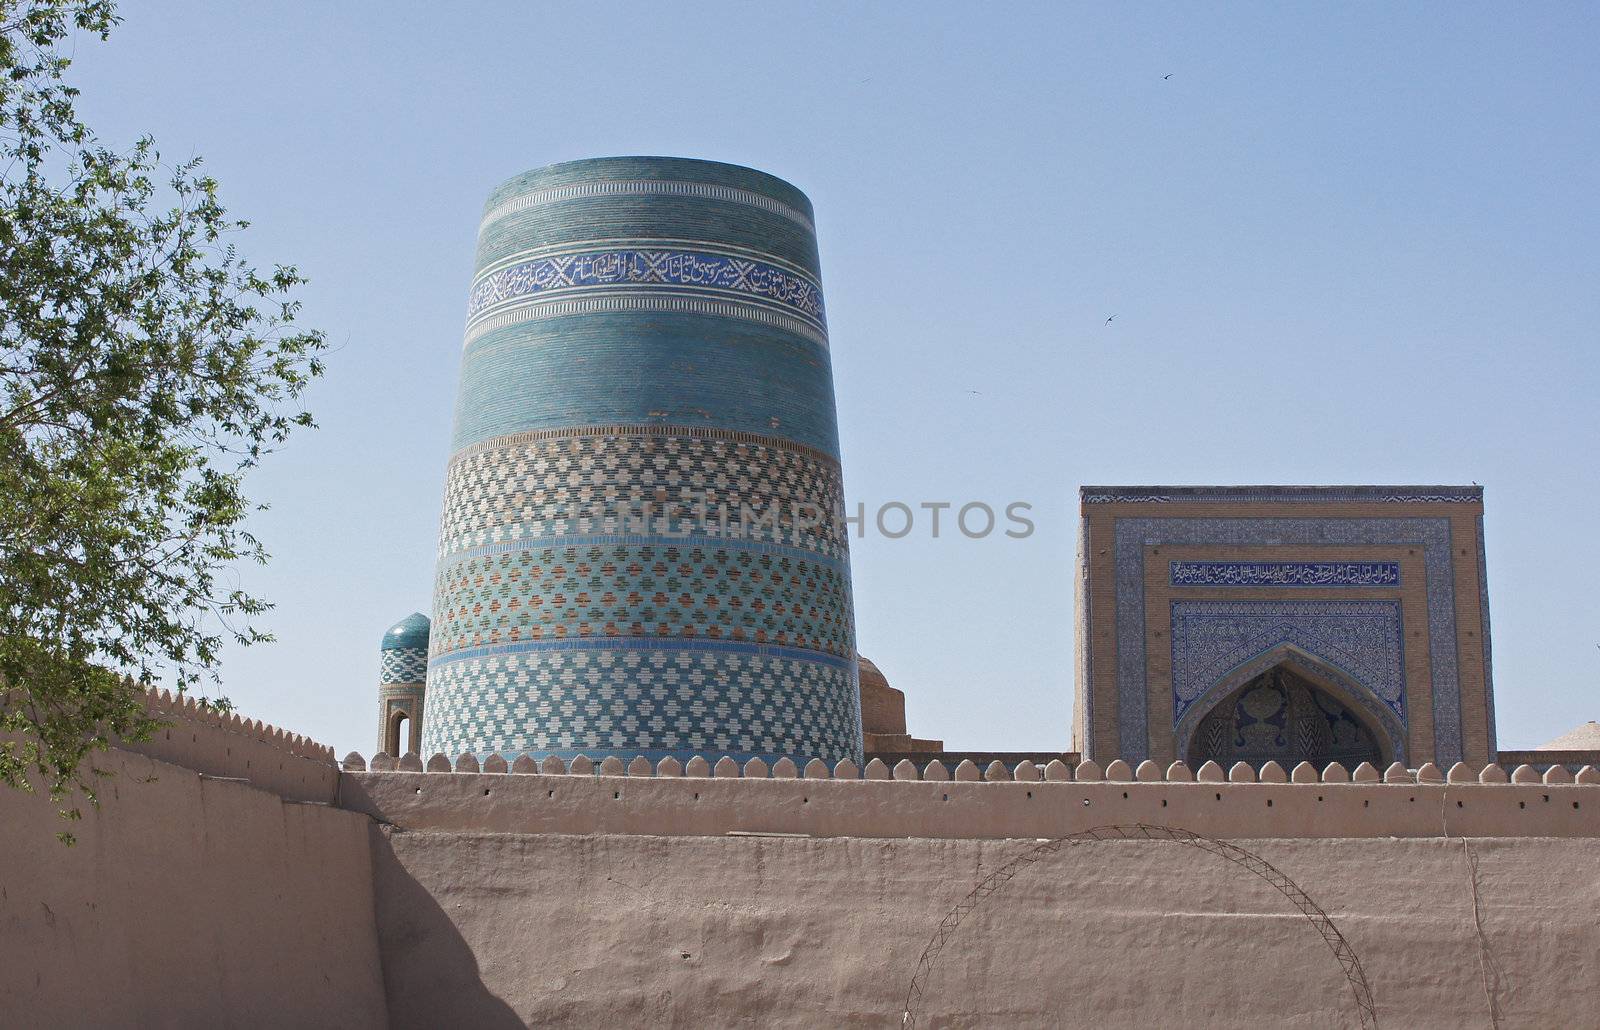 Kalta Minor, landmark of the ancient city of Khiva, silk road, Uzbekistan, Central Asia